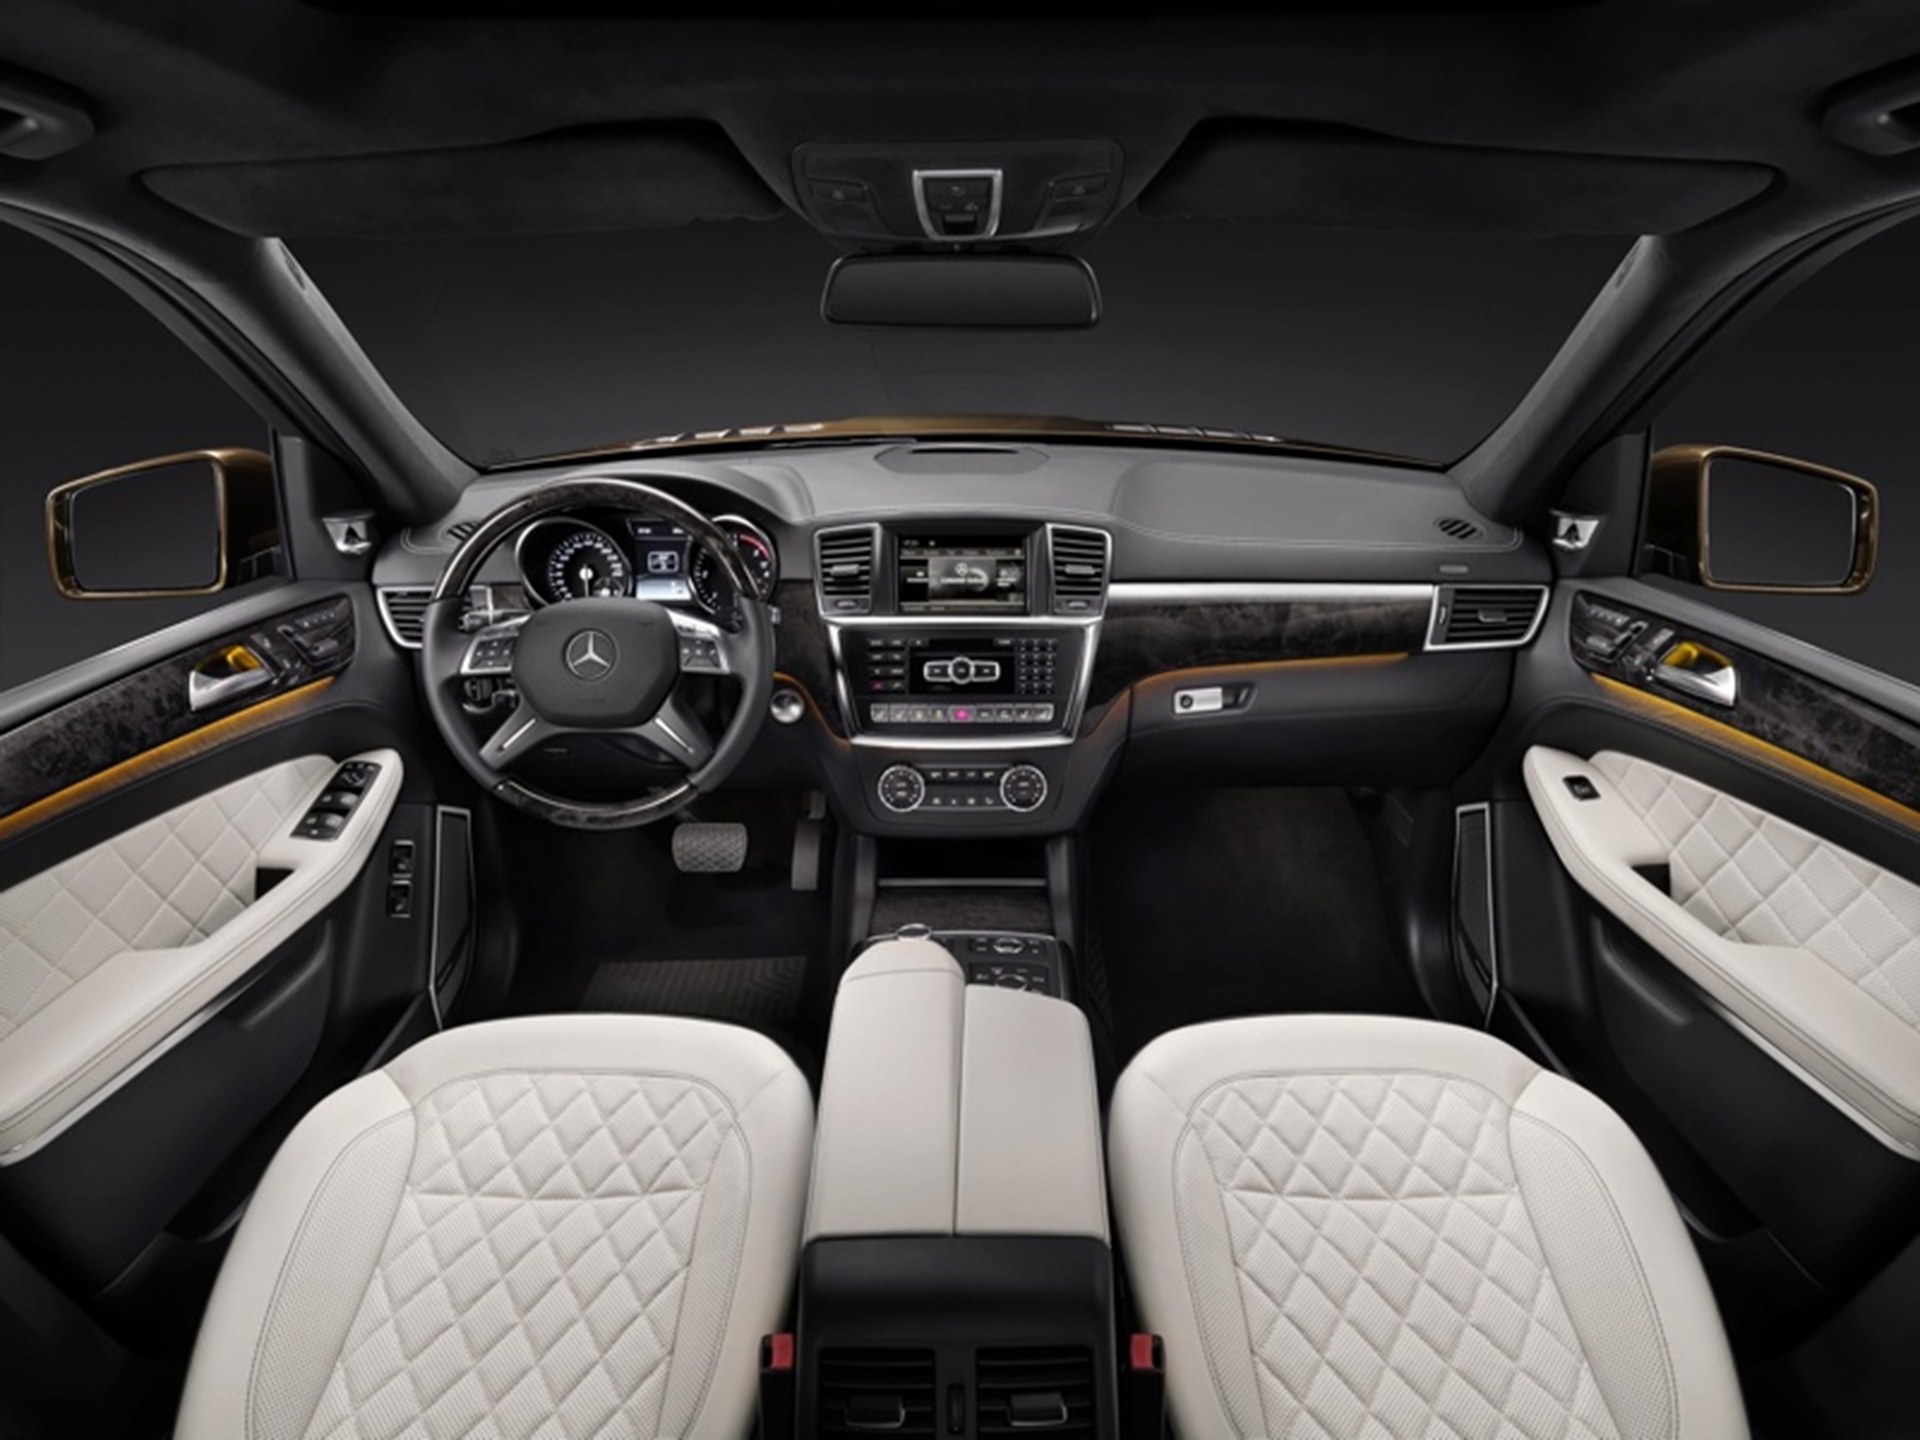 Mercedes-Benz Gl Class Interior